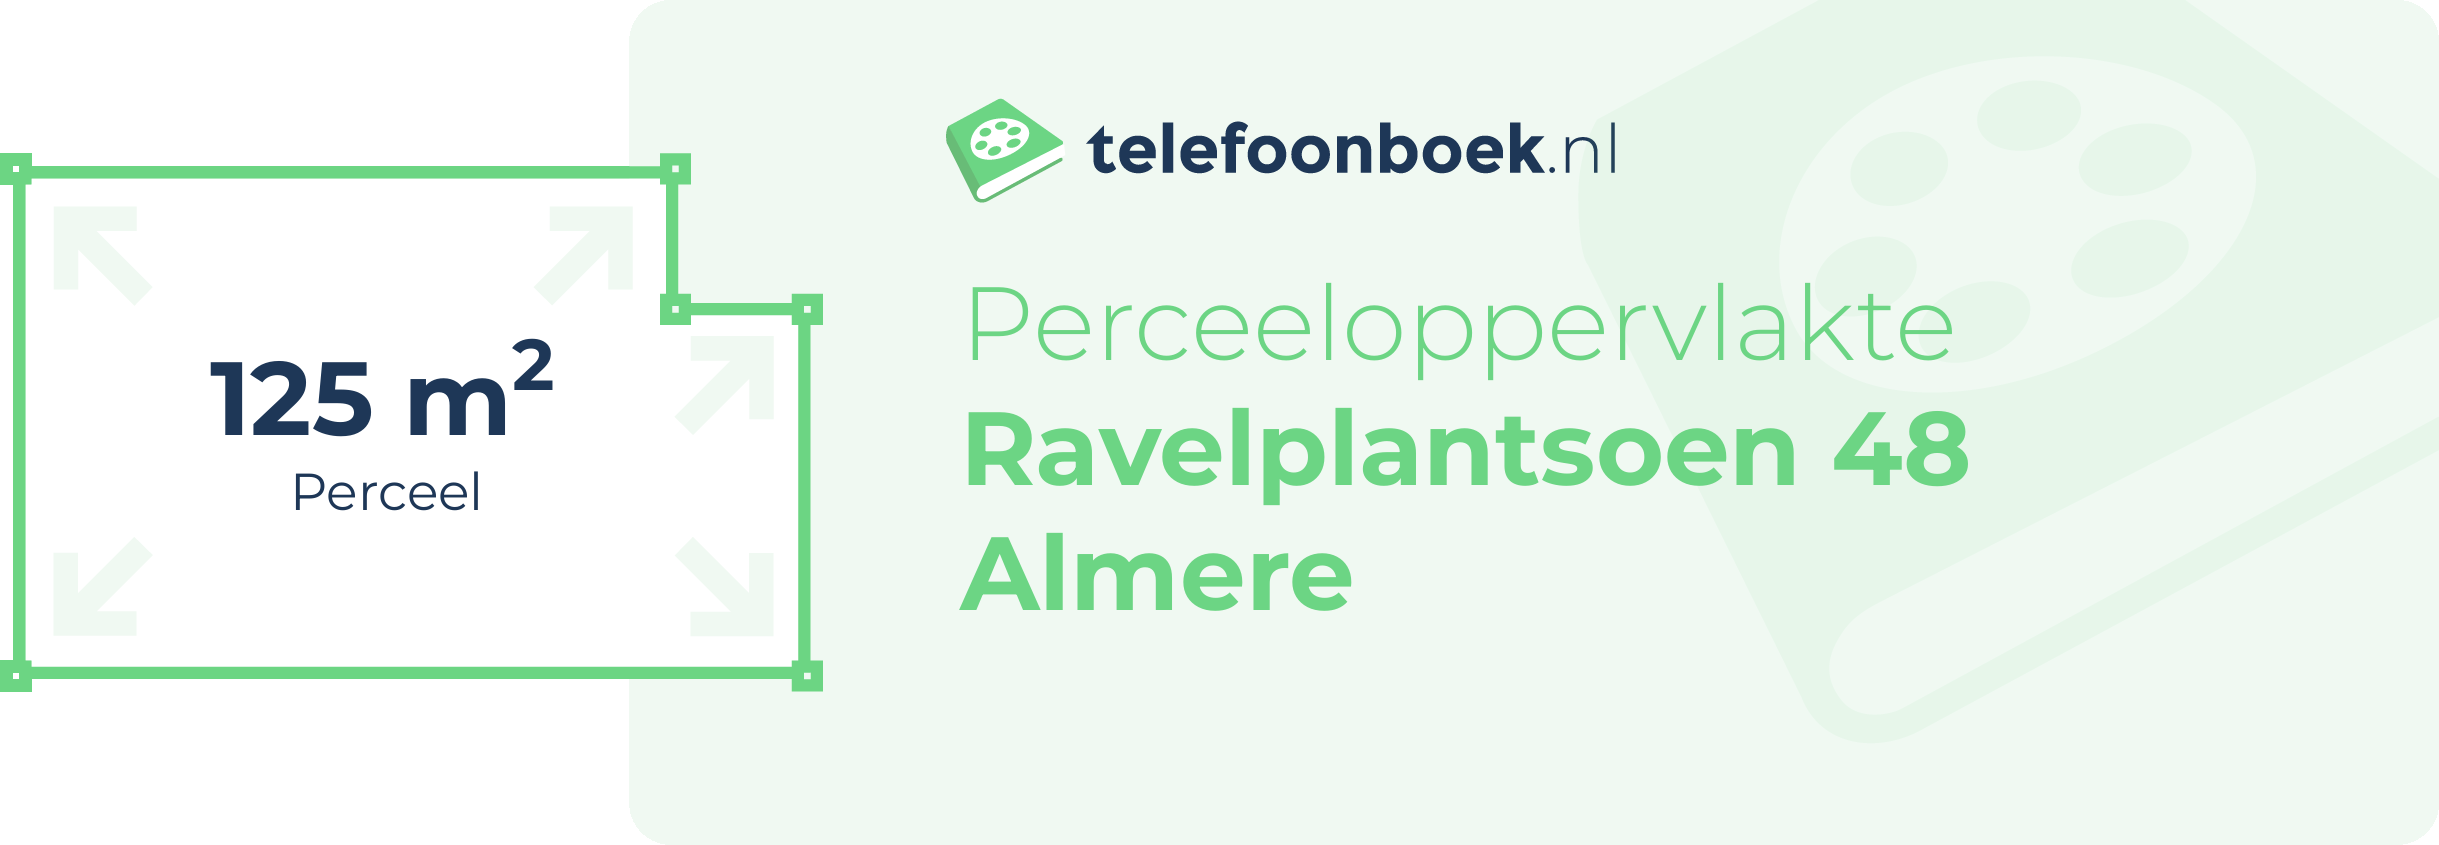 Perceeloppervlakte Ravelplantsoen 48 Almere